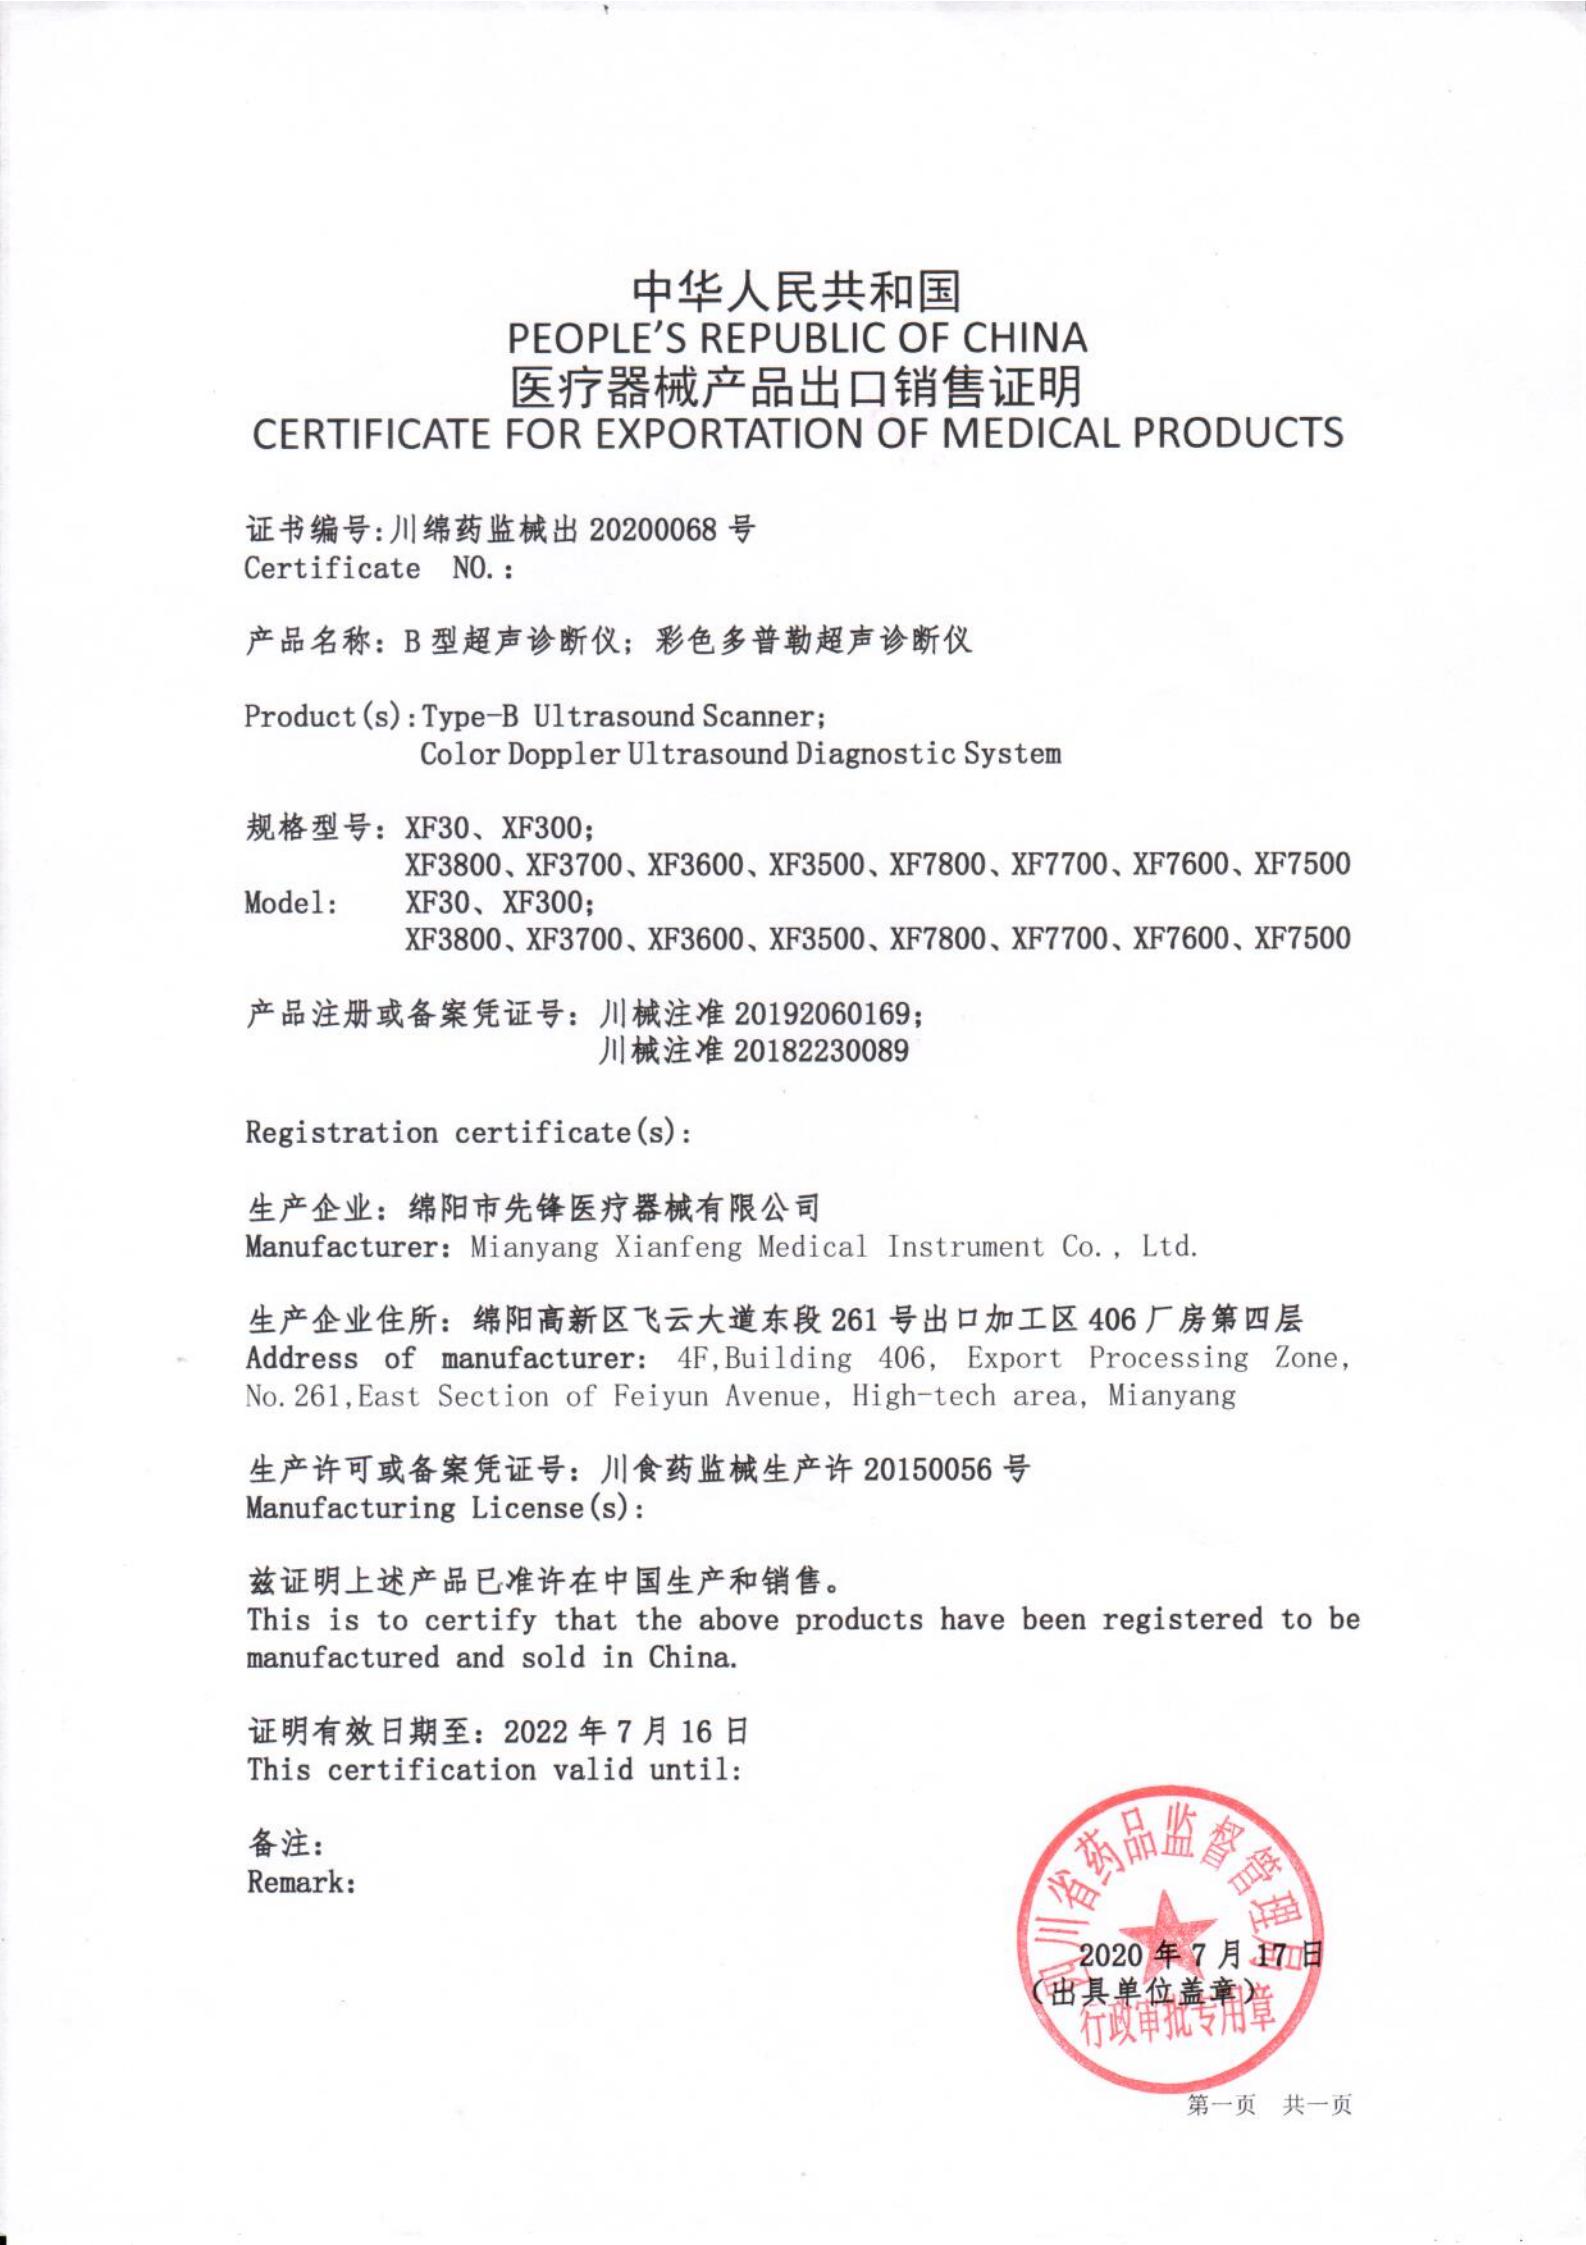 Free sales certificate 医疗器械出口销售证明_00.jpg